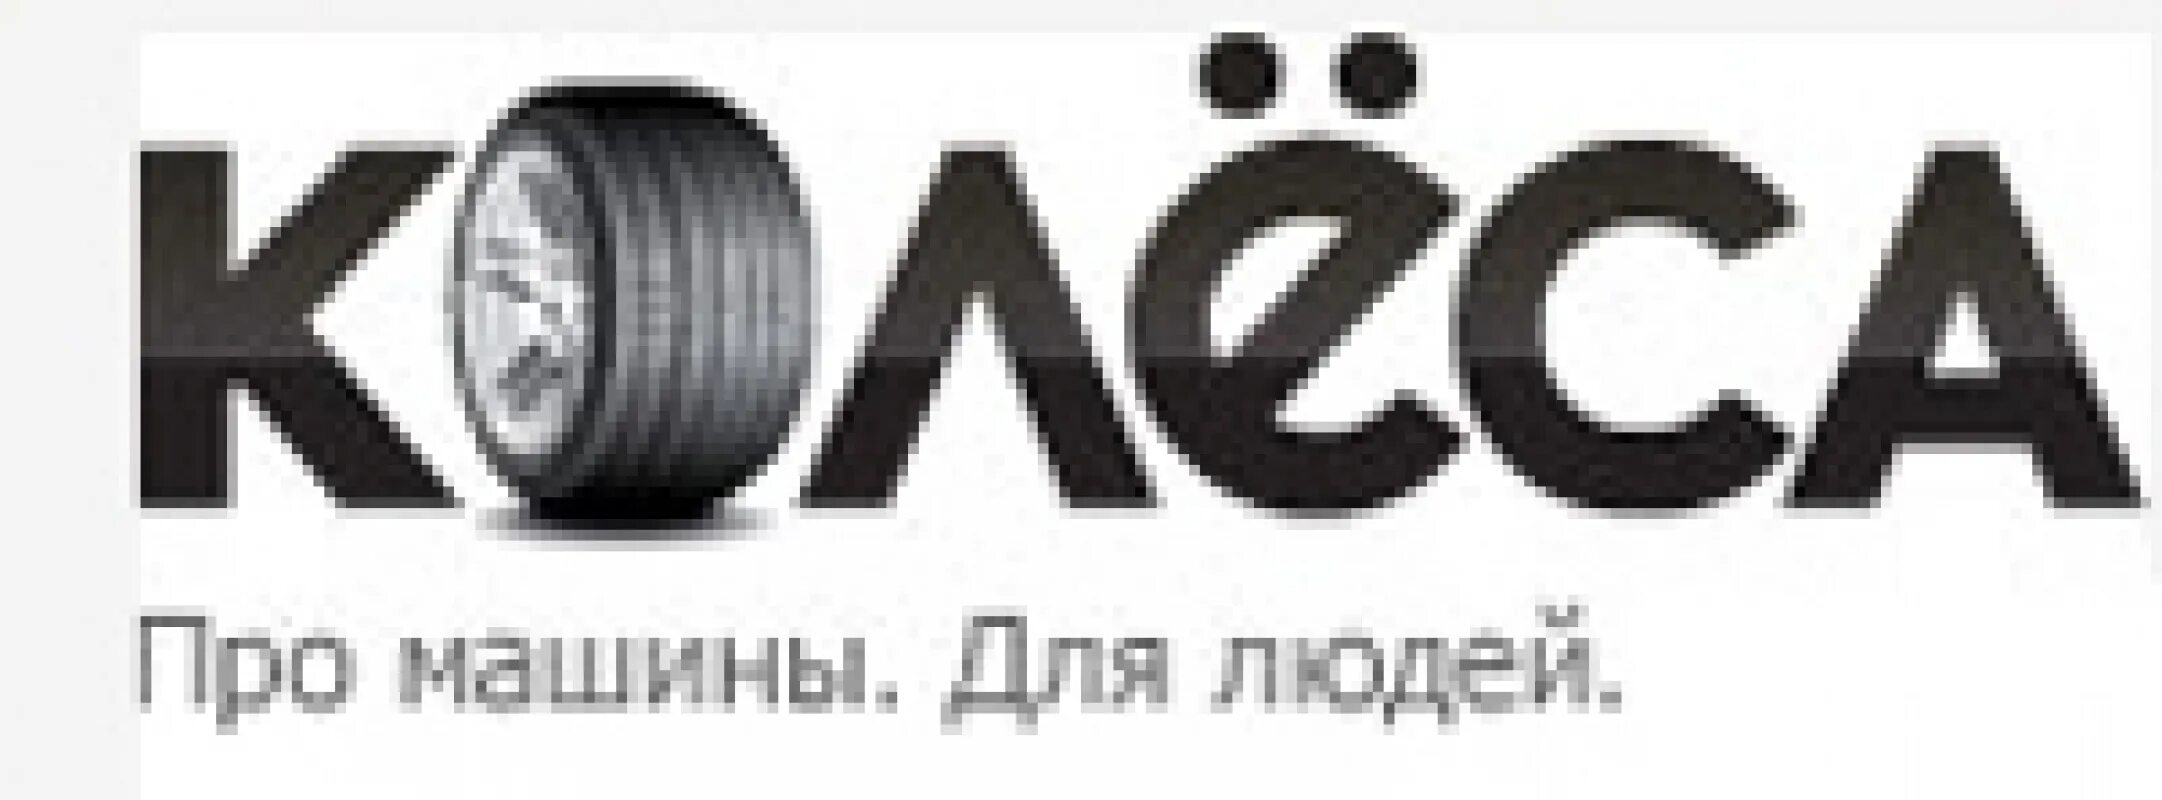 Kolesa. Колеса кз. Сайт колёса kz. Колеса кз логотип. Колесо Казахстан.